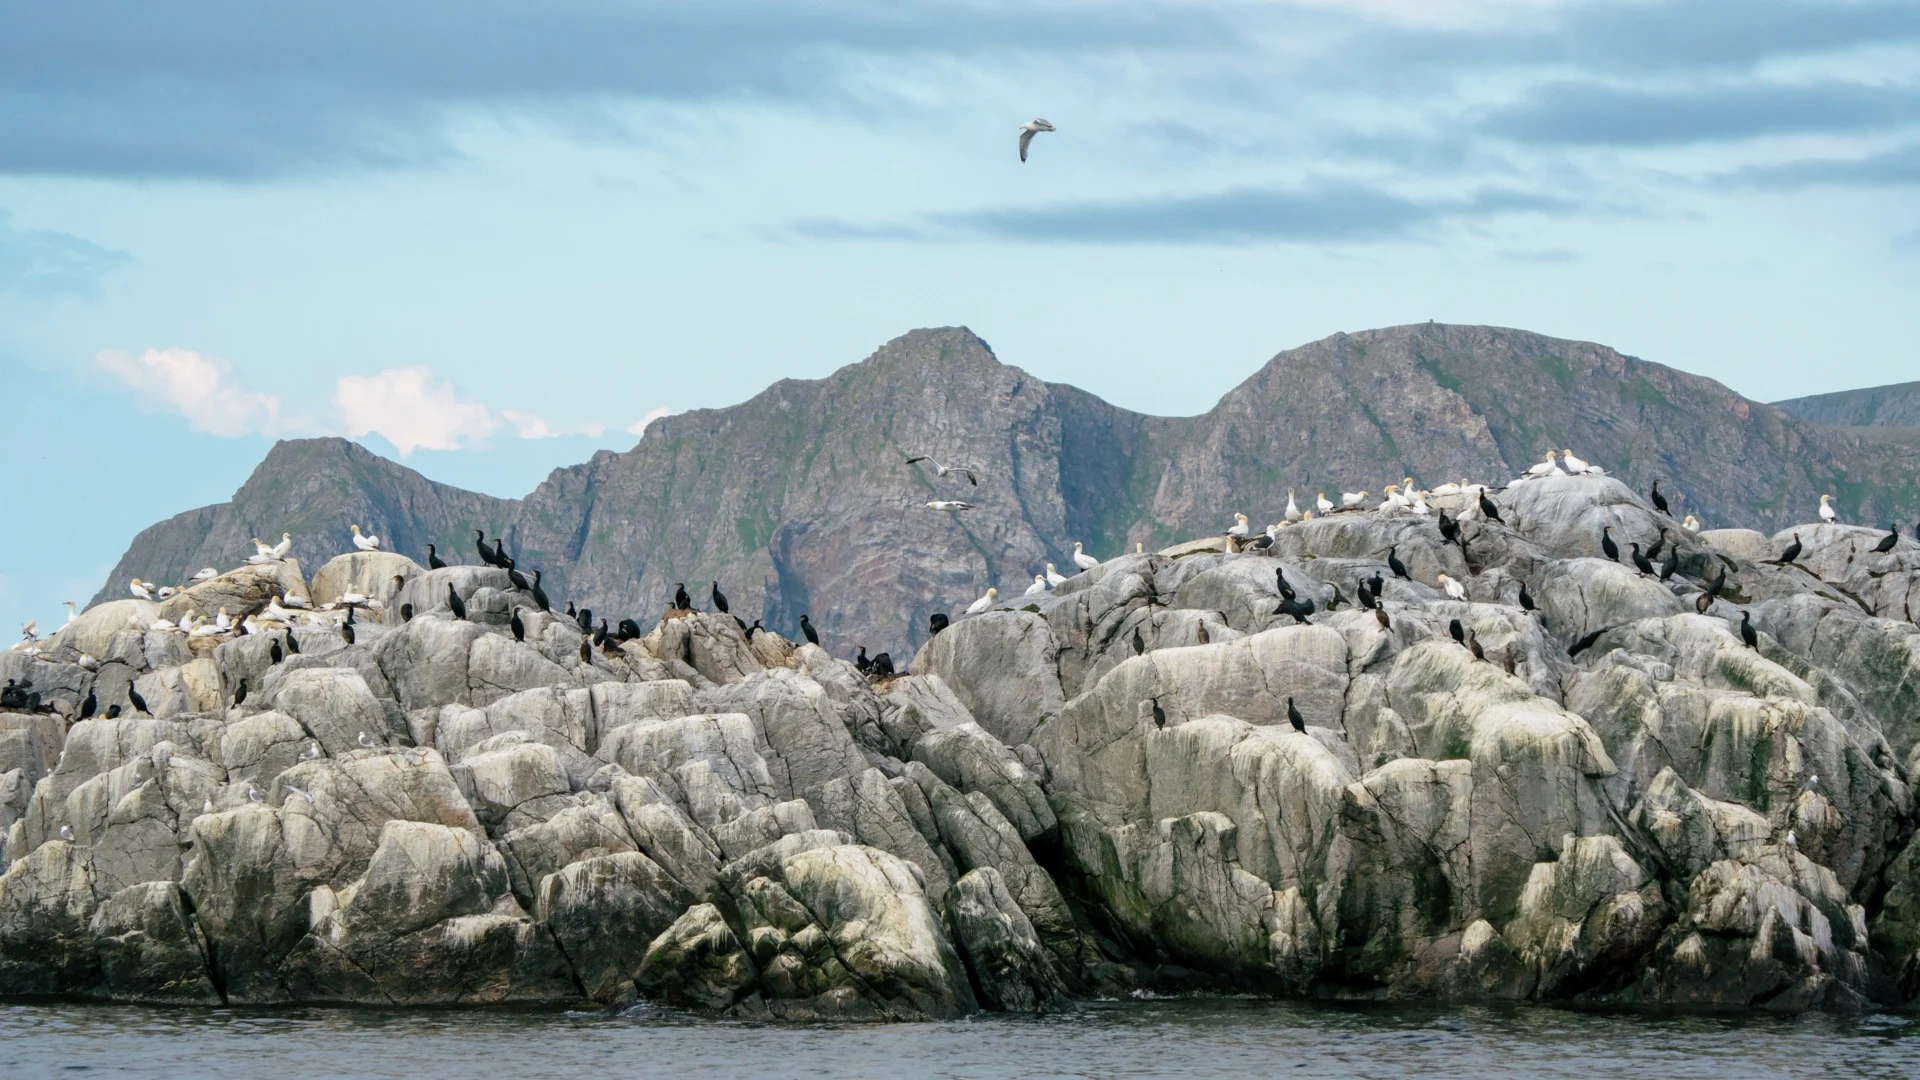 Gjesværstappan bird cliffs in Norway